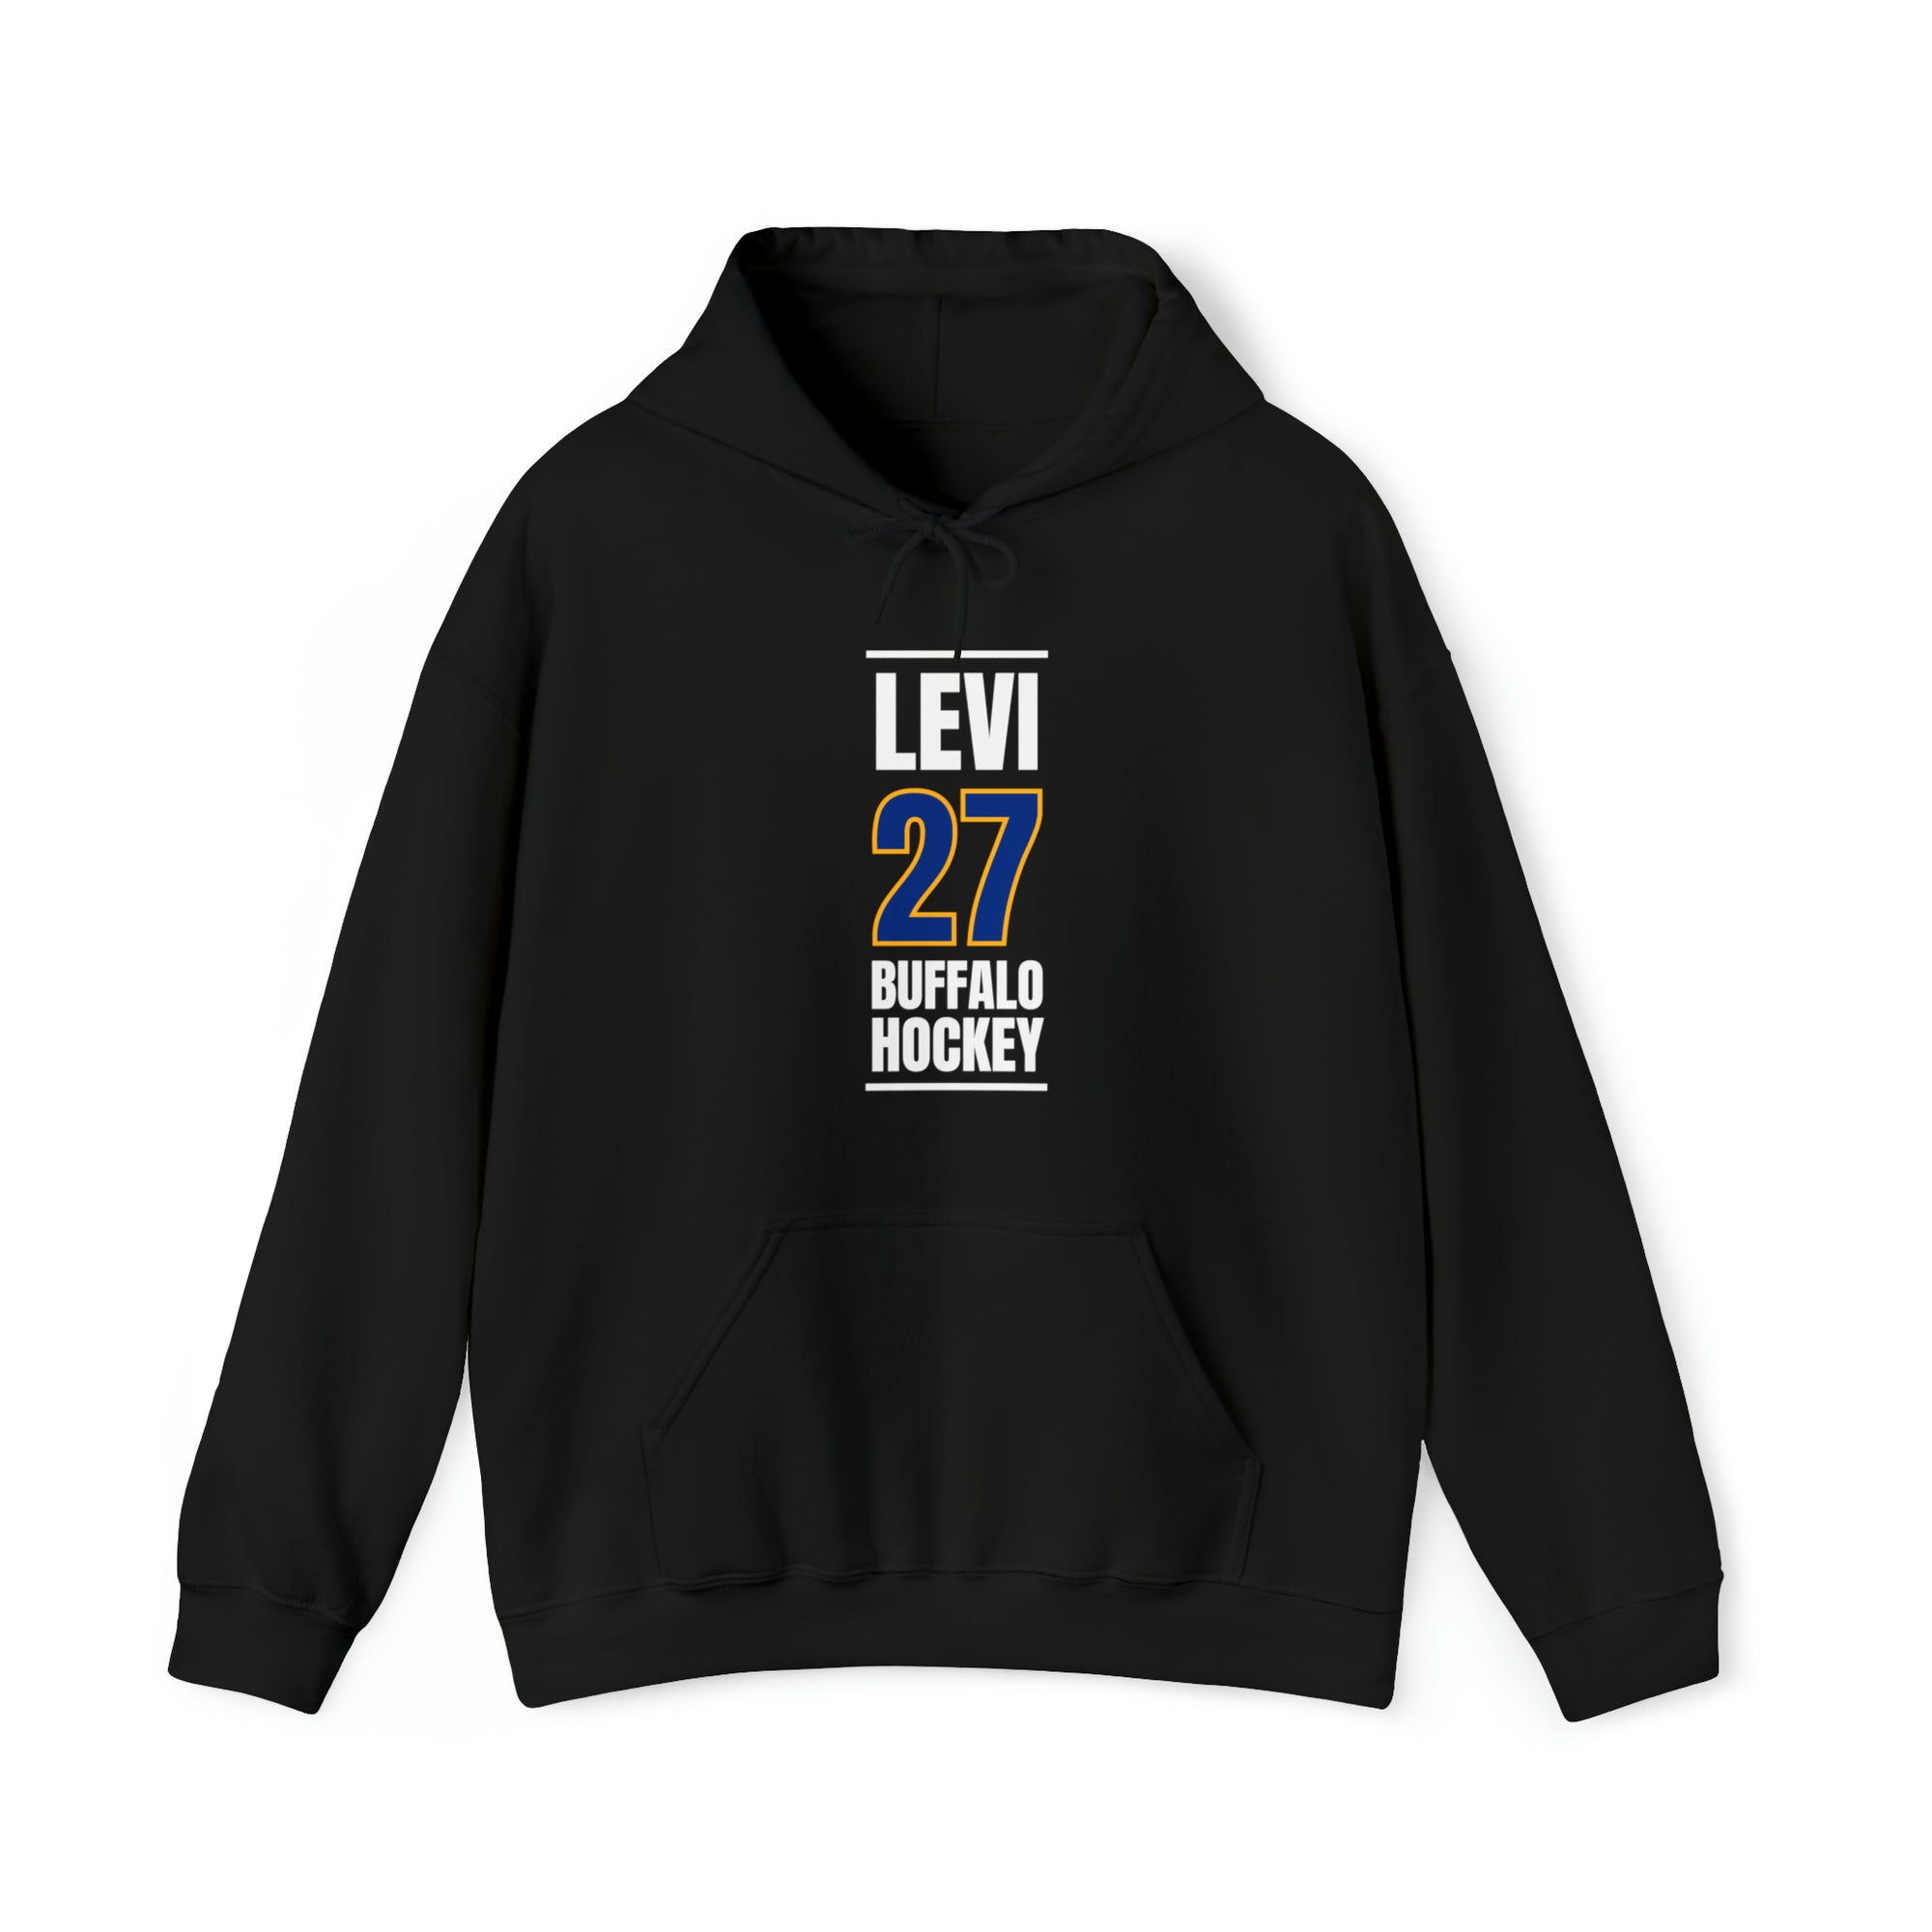 Levi 27 Buffalo Hockey Royal Blue Vertical Design Unisex Hooded Sweatshirt